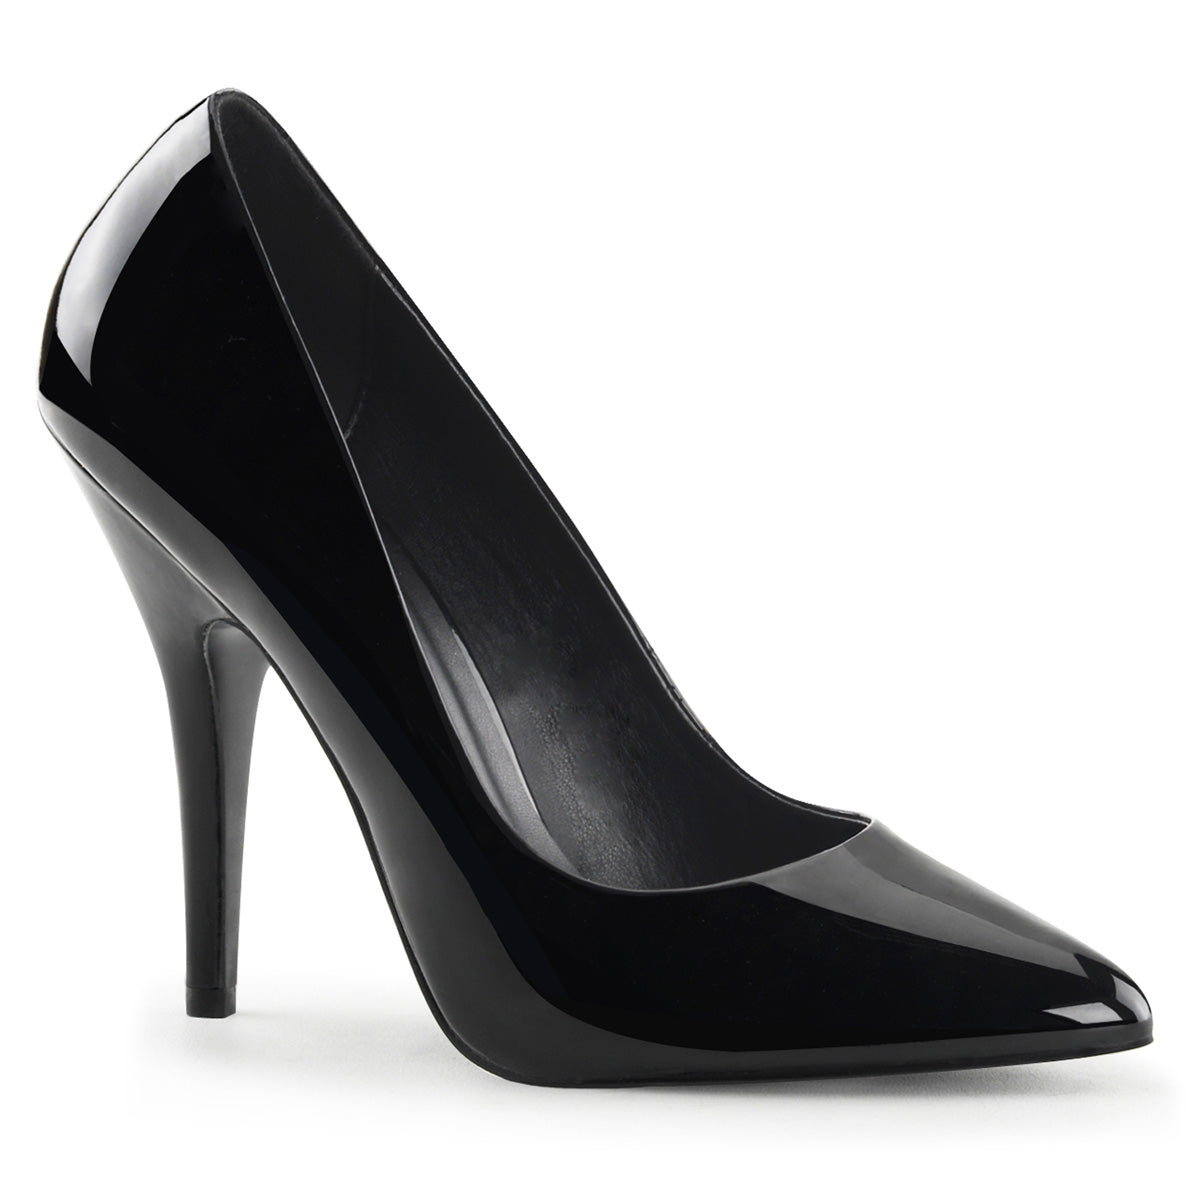 SEDUCE-420 Sexy Shoes 5" Heel Black Patent Fetish Footwear